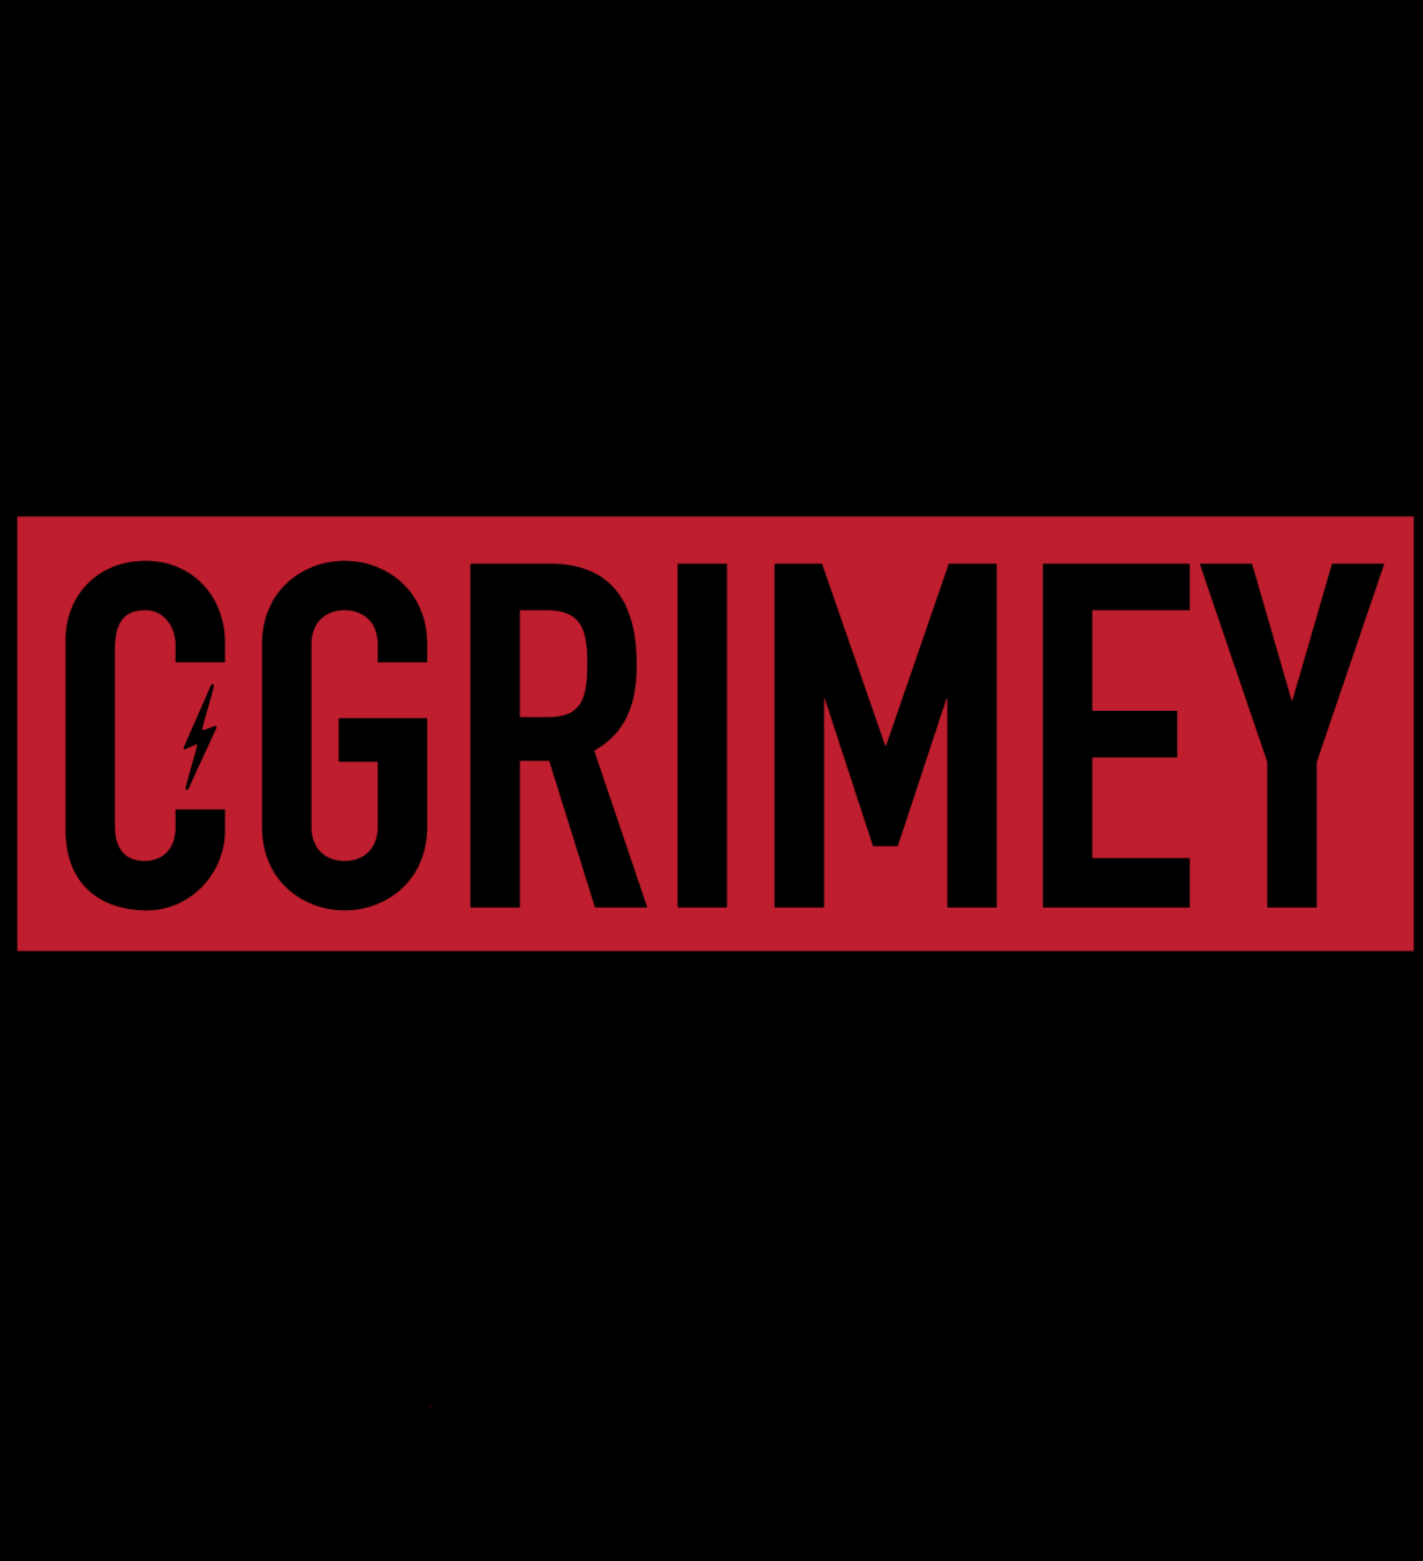 C-Grimey Apparel